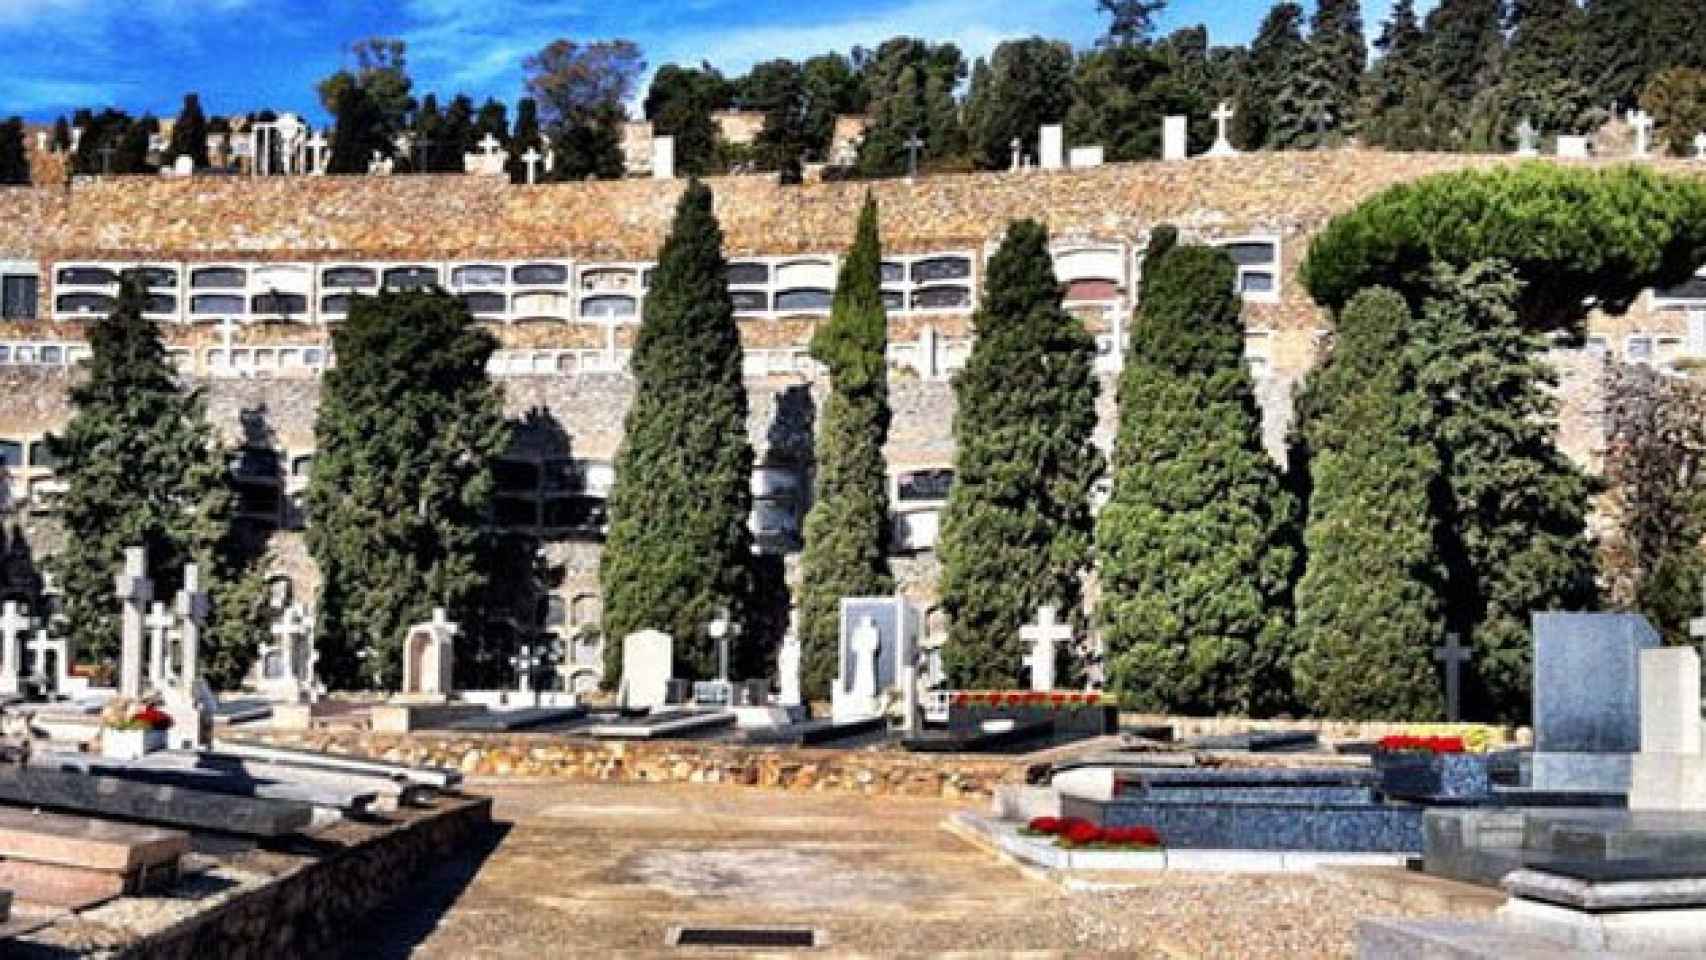 Cementerio de Montjuïc, donde Facultatieve Technologies construyó los hornos funerarios en 2010 por encargo de Cementiris / CG